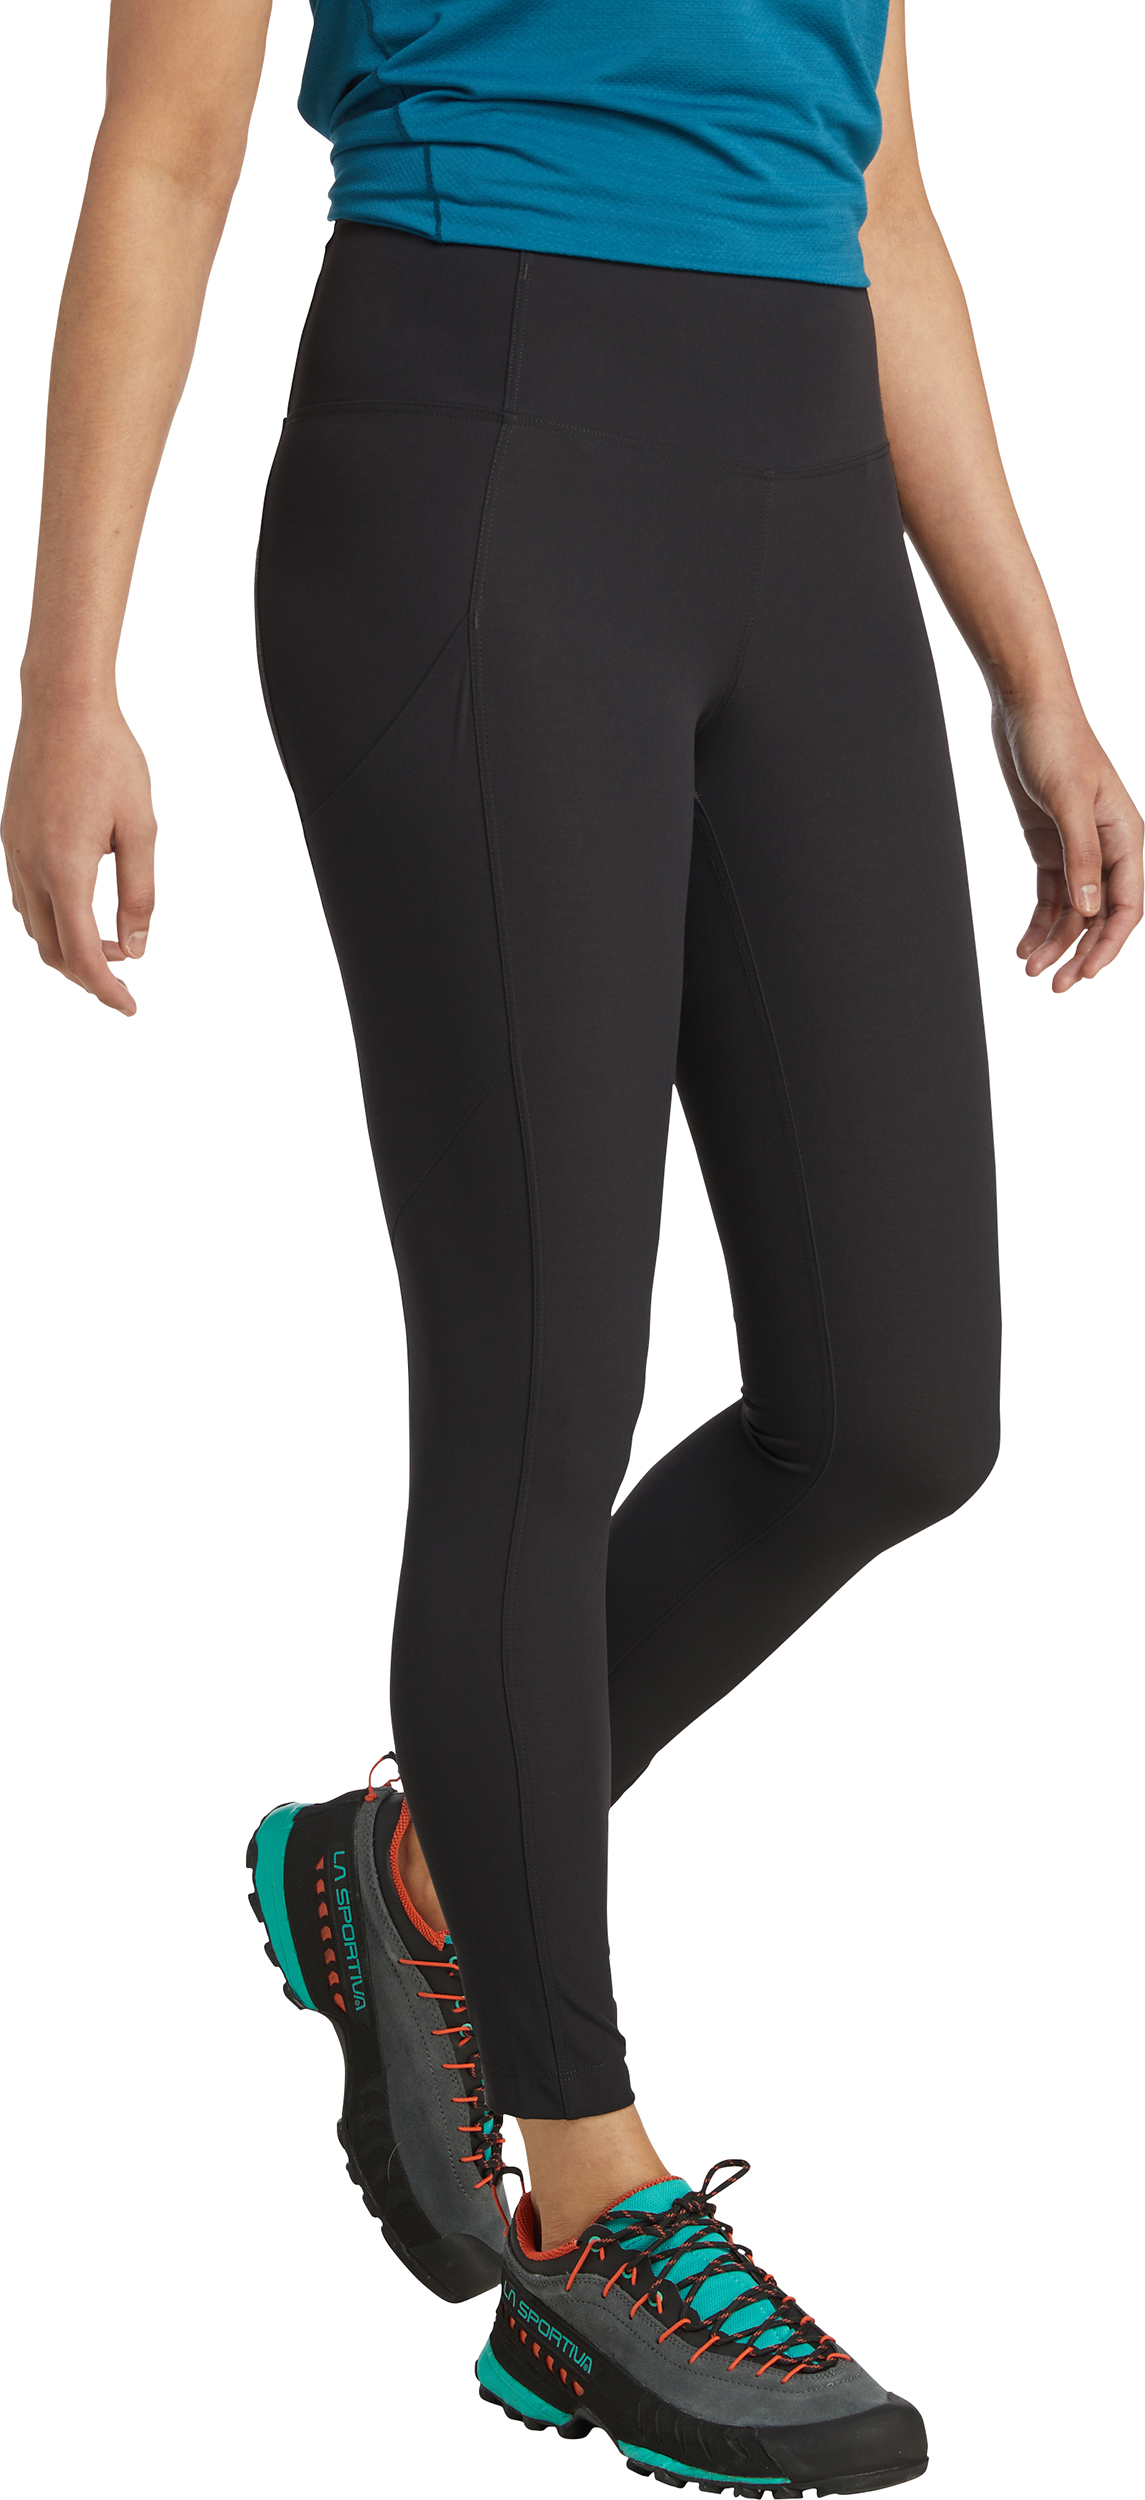 Athleta gray ombre leggings high rise size S